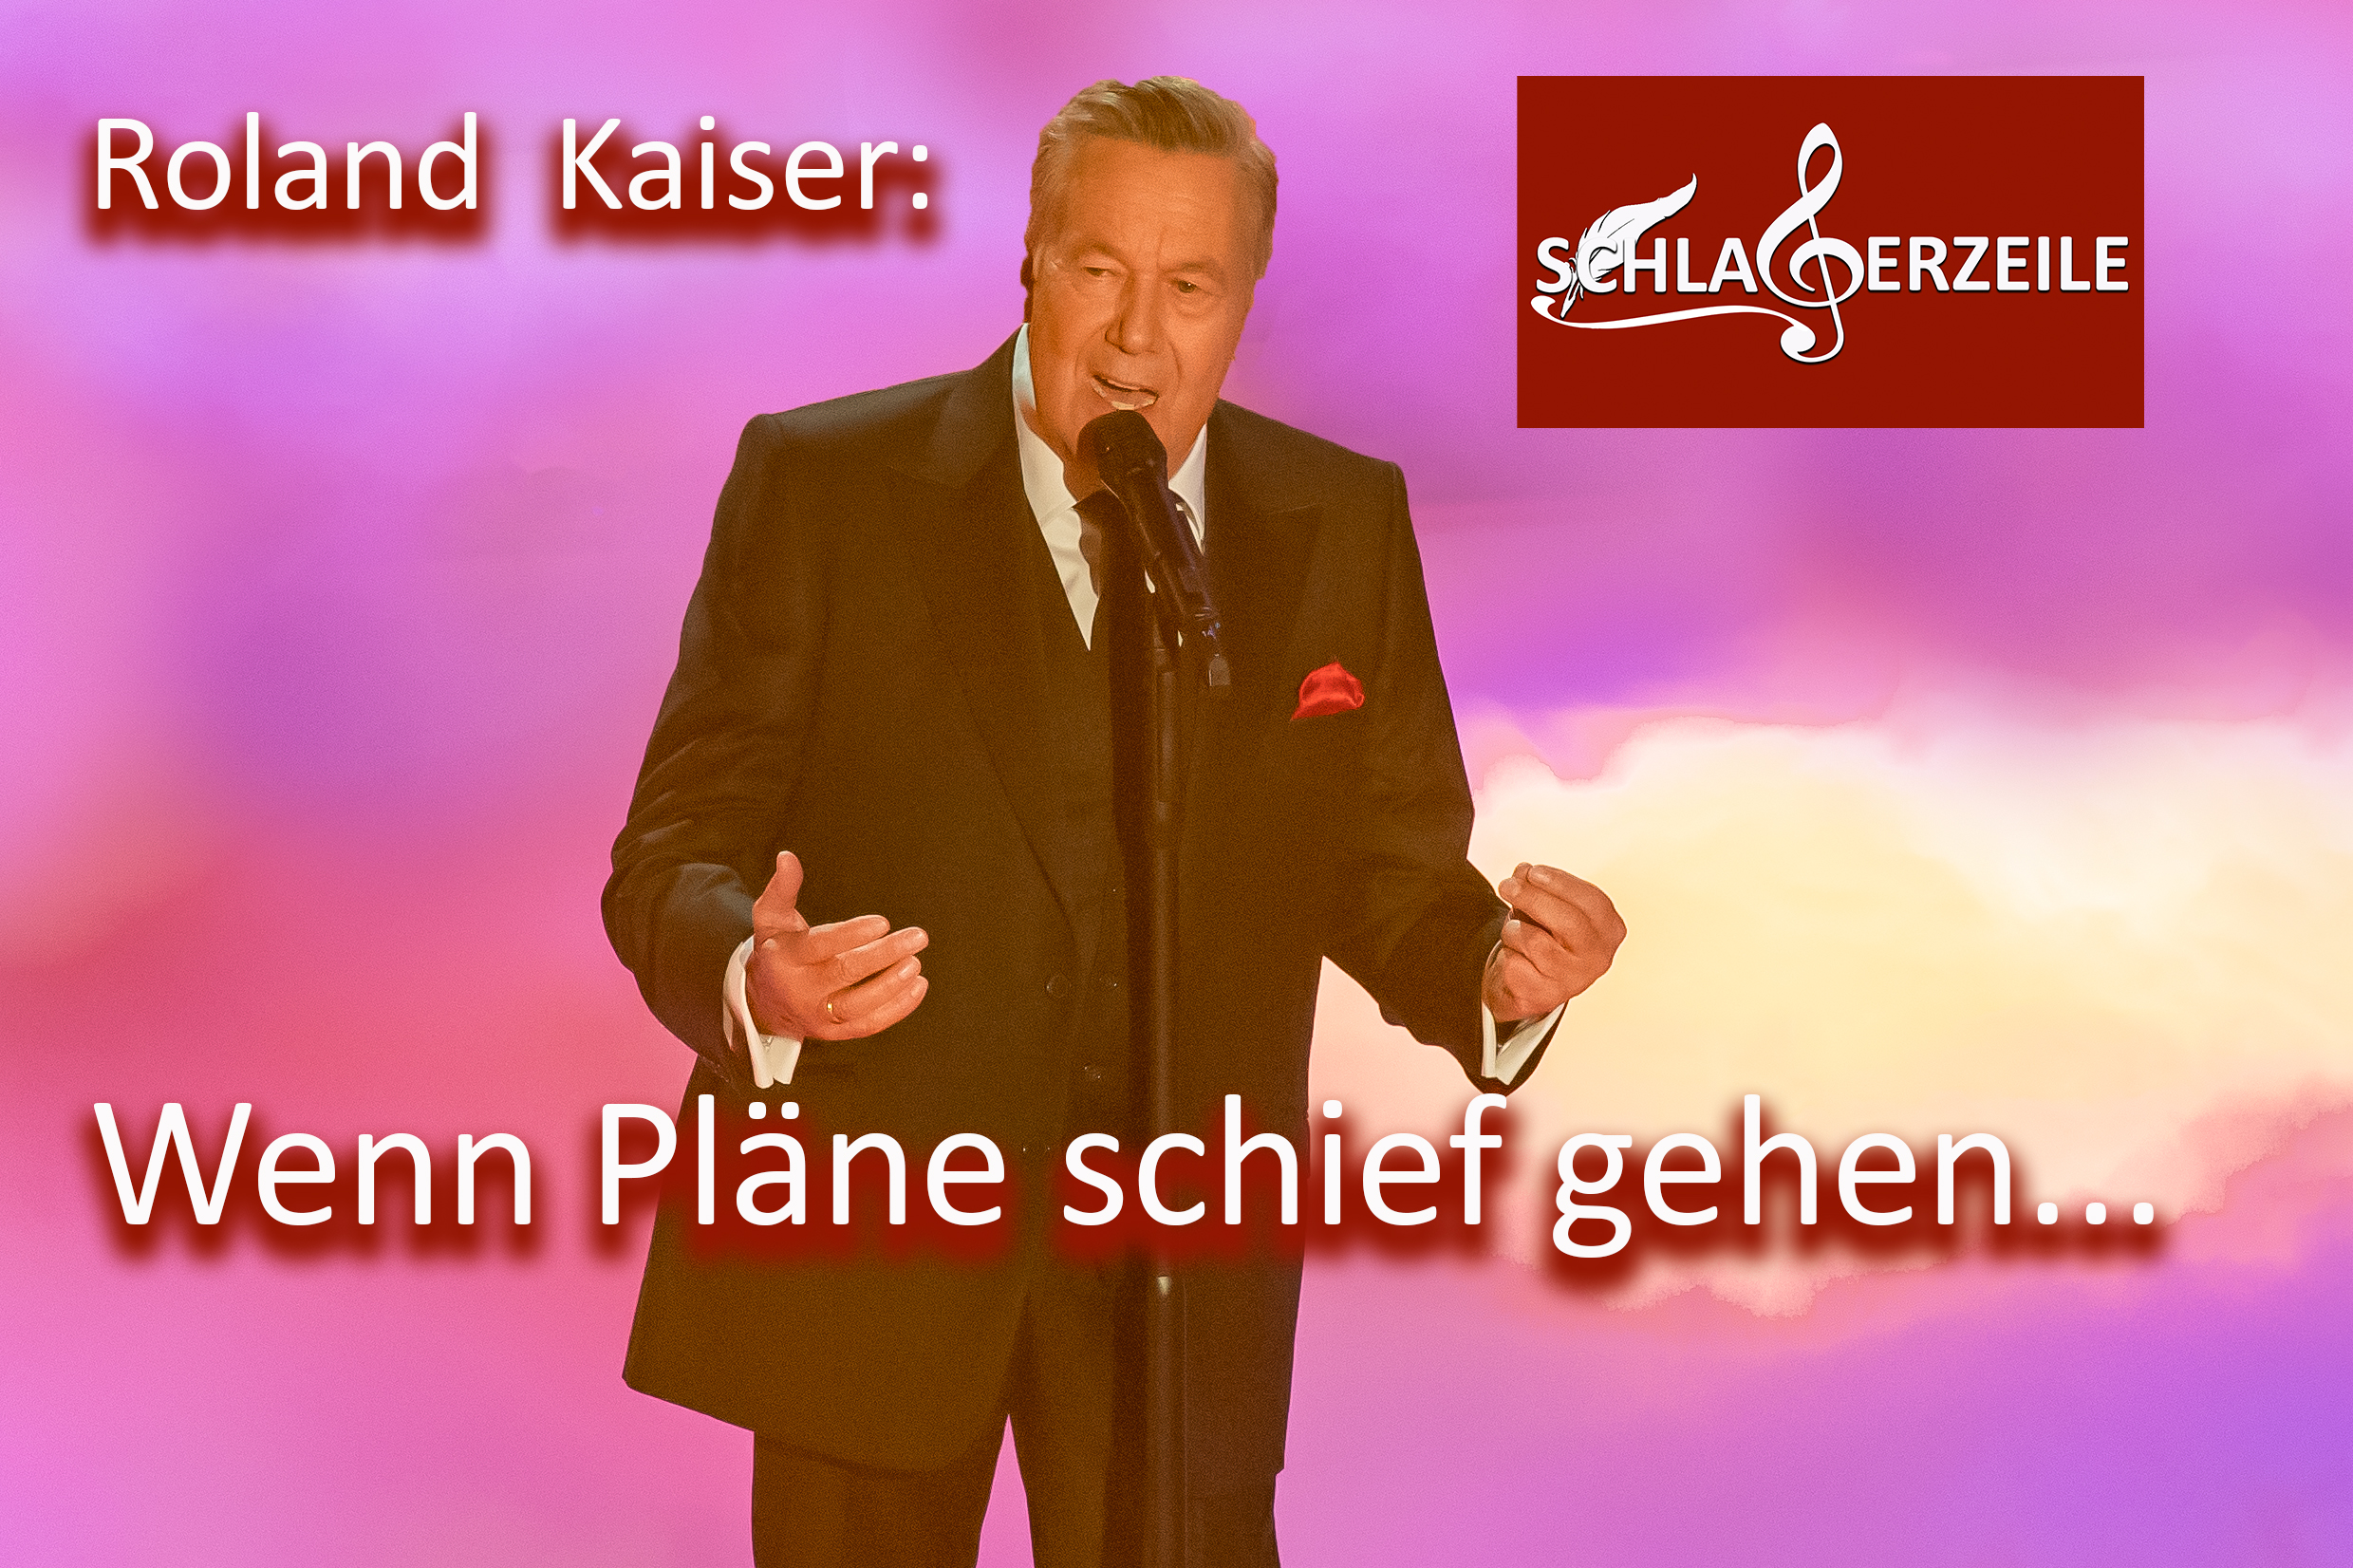 Roland Kaiser, neue Single April 23